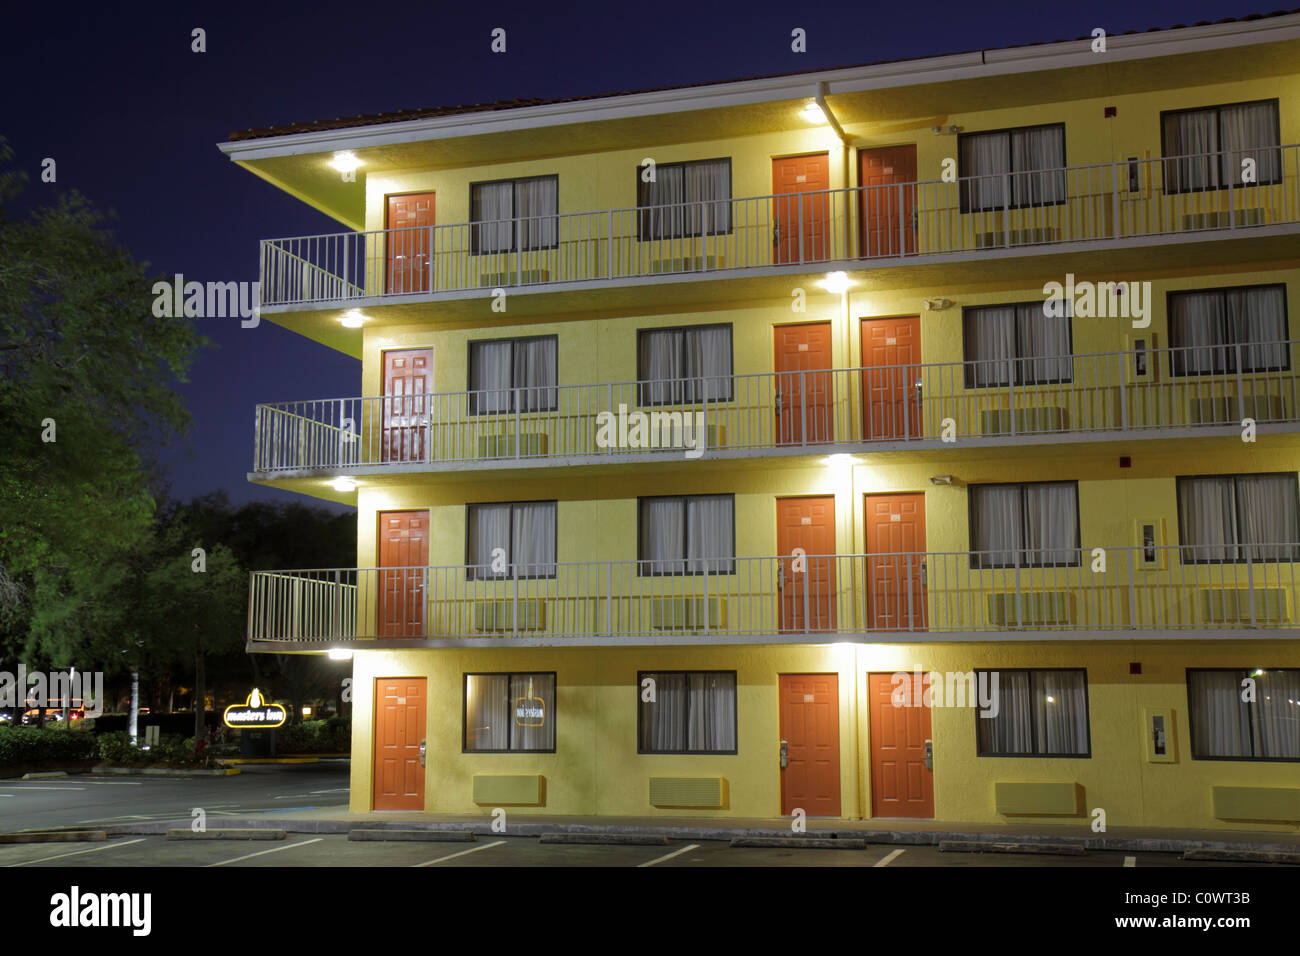 Orlando Florida,International Drive,dusk,evening,night,hotel hotels lodging inn motel motels,building,balconies,doors,windows,well lit,visitors travel Stock Photo